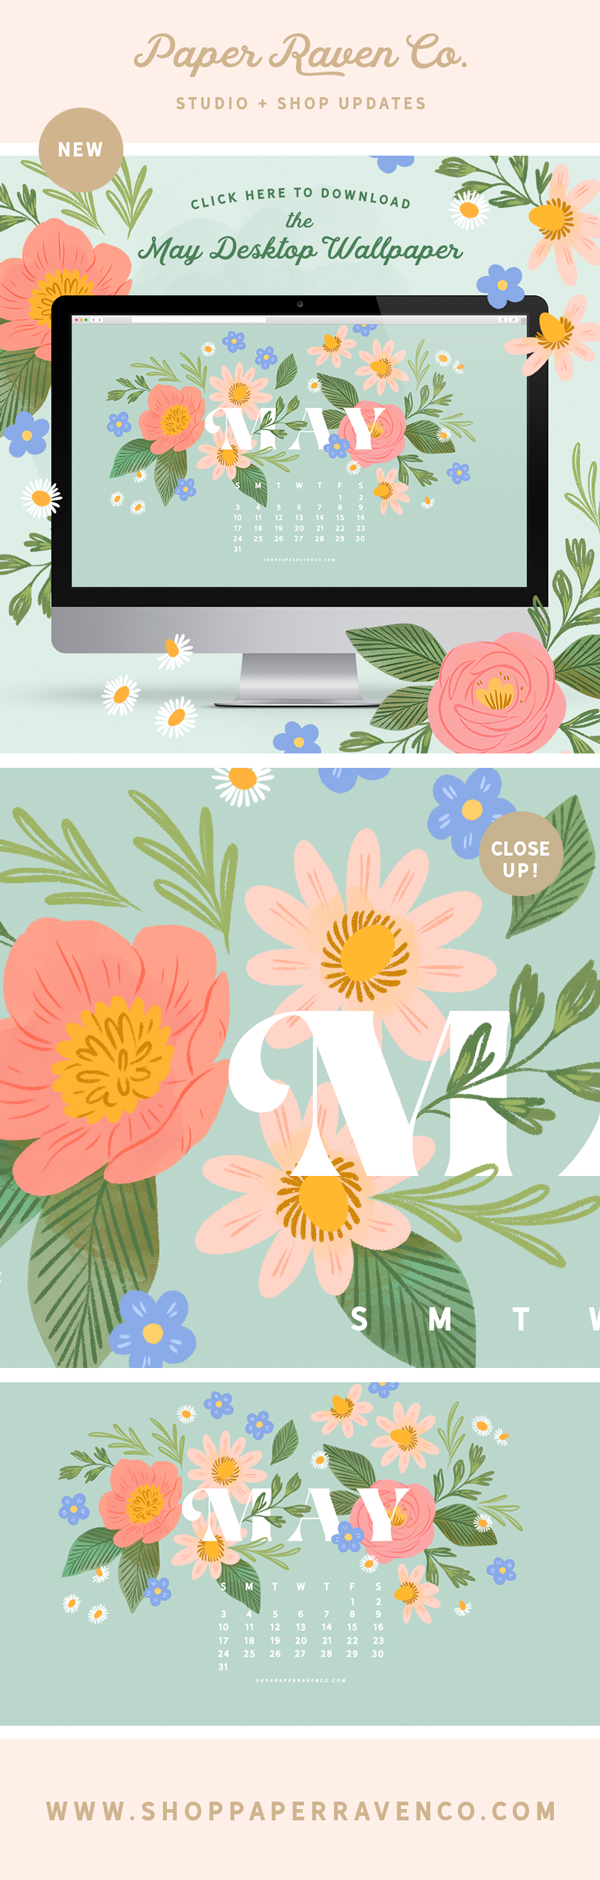 May 2020 Illustrated Desktop Wallpaper by Paper Raven Co. | www.ShopPaperRavenCo.com | #dressyourtech #desktopwallpaper #desktopdownload